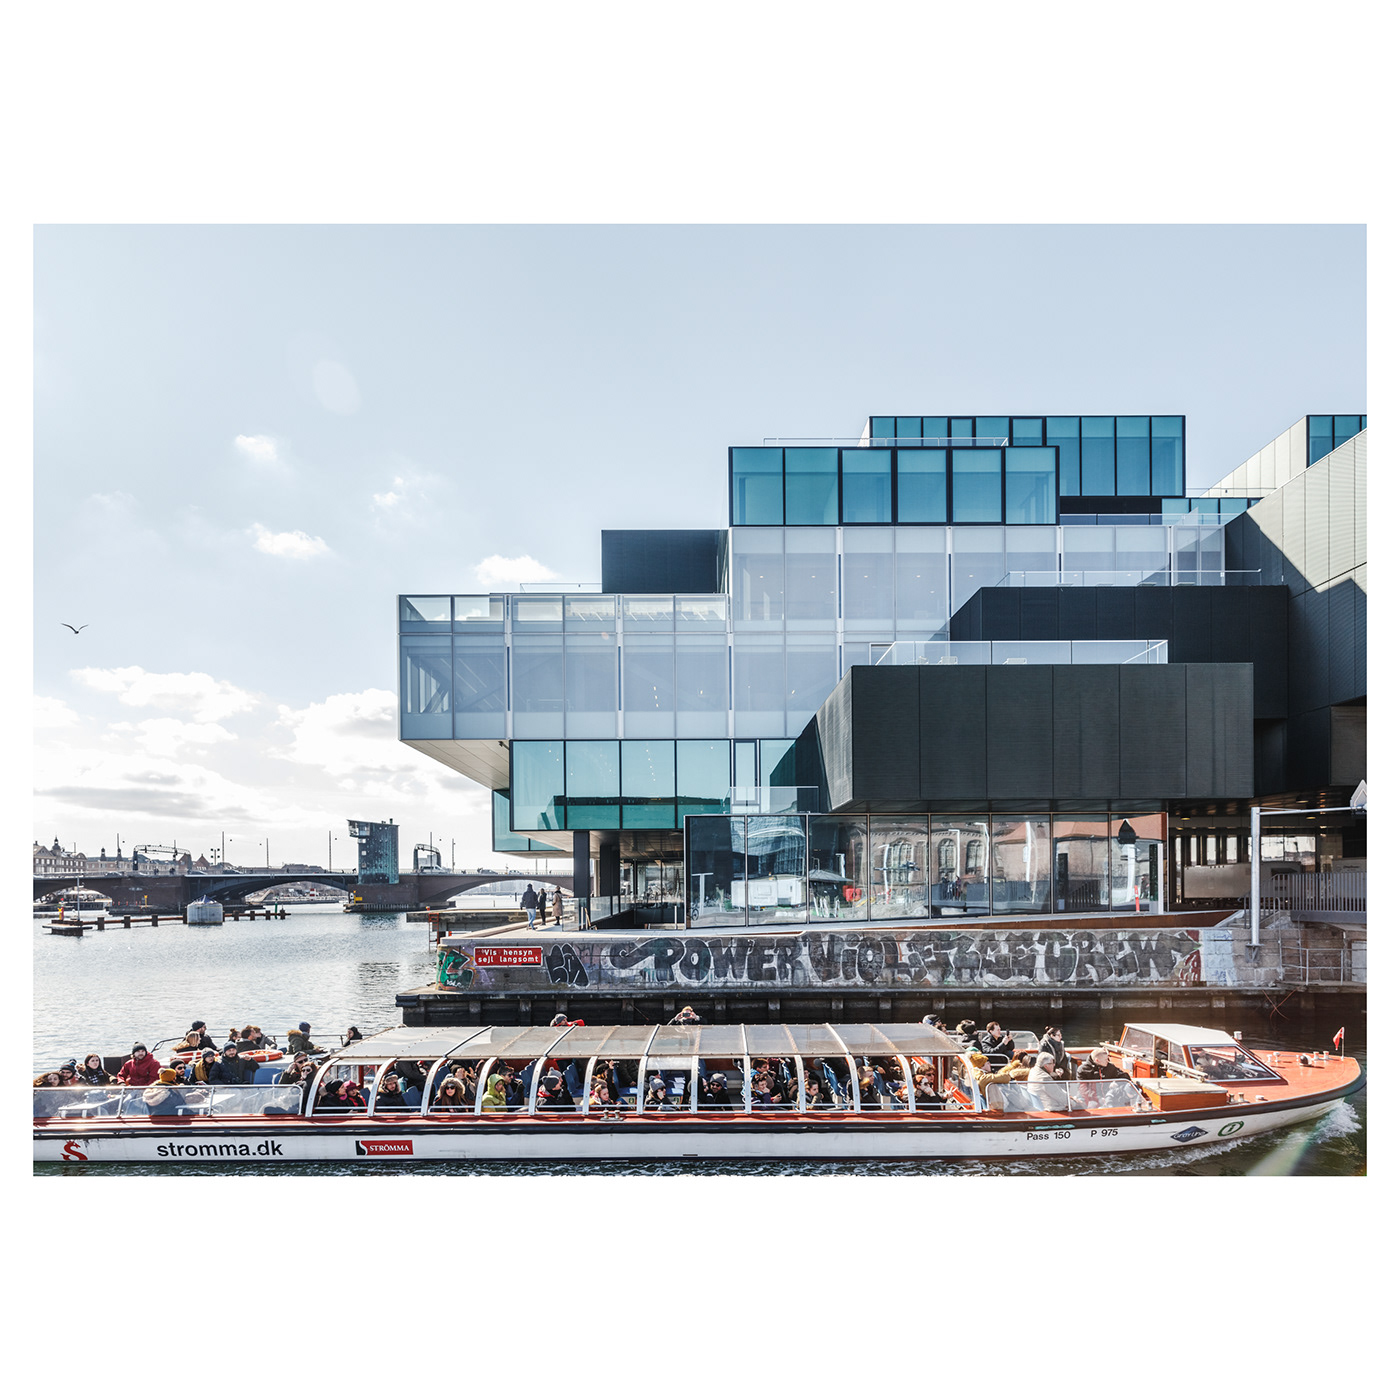 OMA koolhaas dutch danish architecture box concrete glass reflection harbour